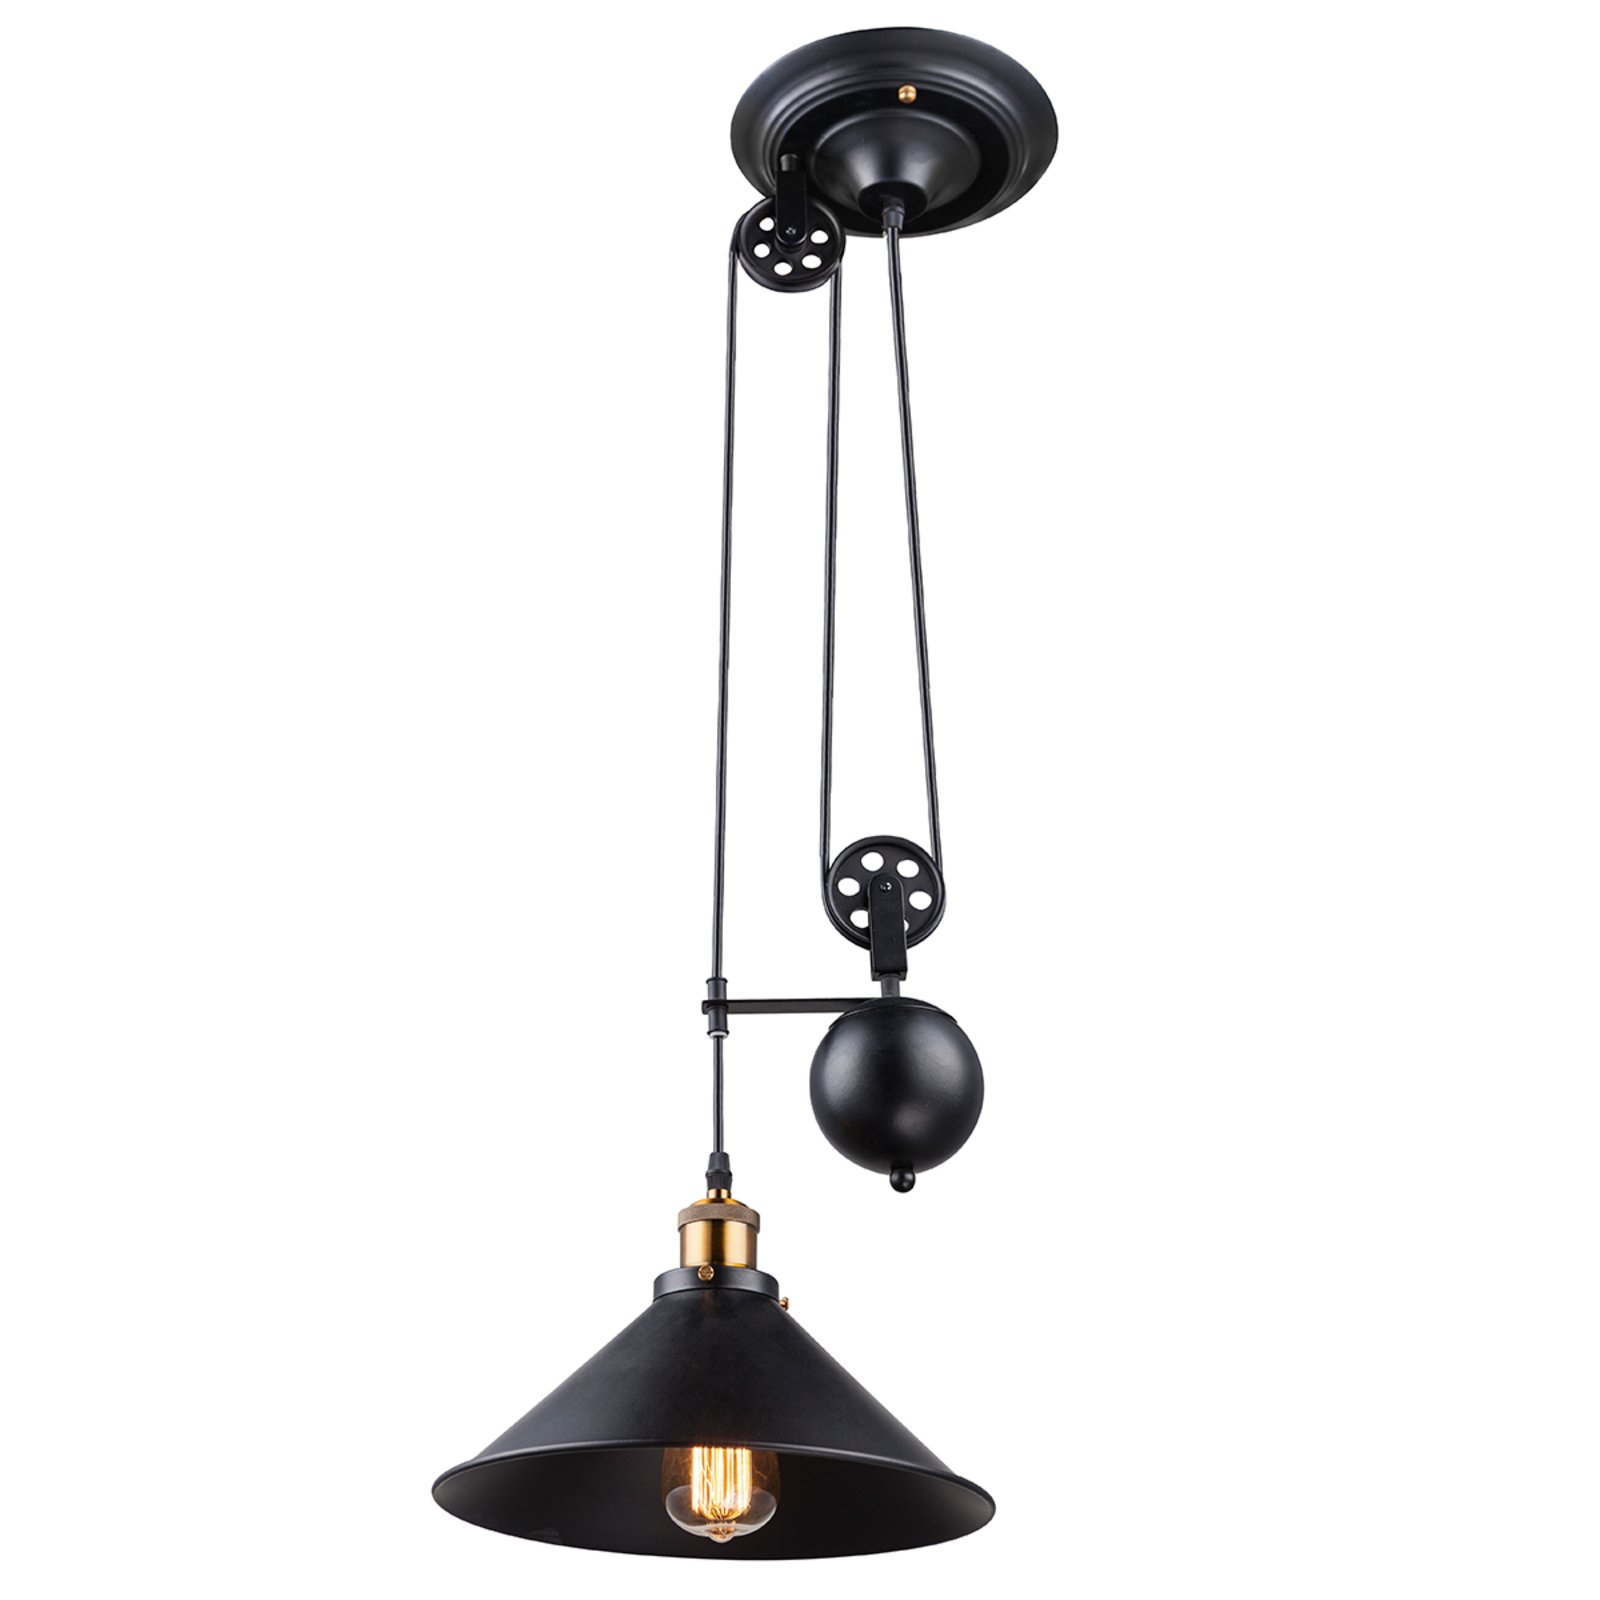 One-bulb hanging light Viktor - height-adjustable